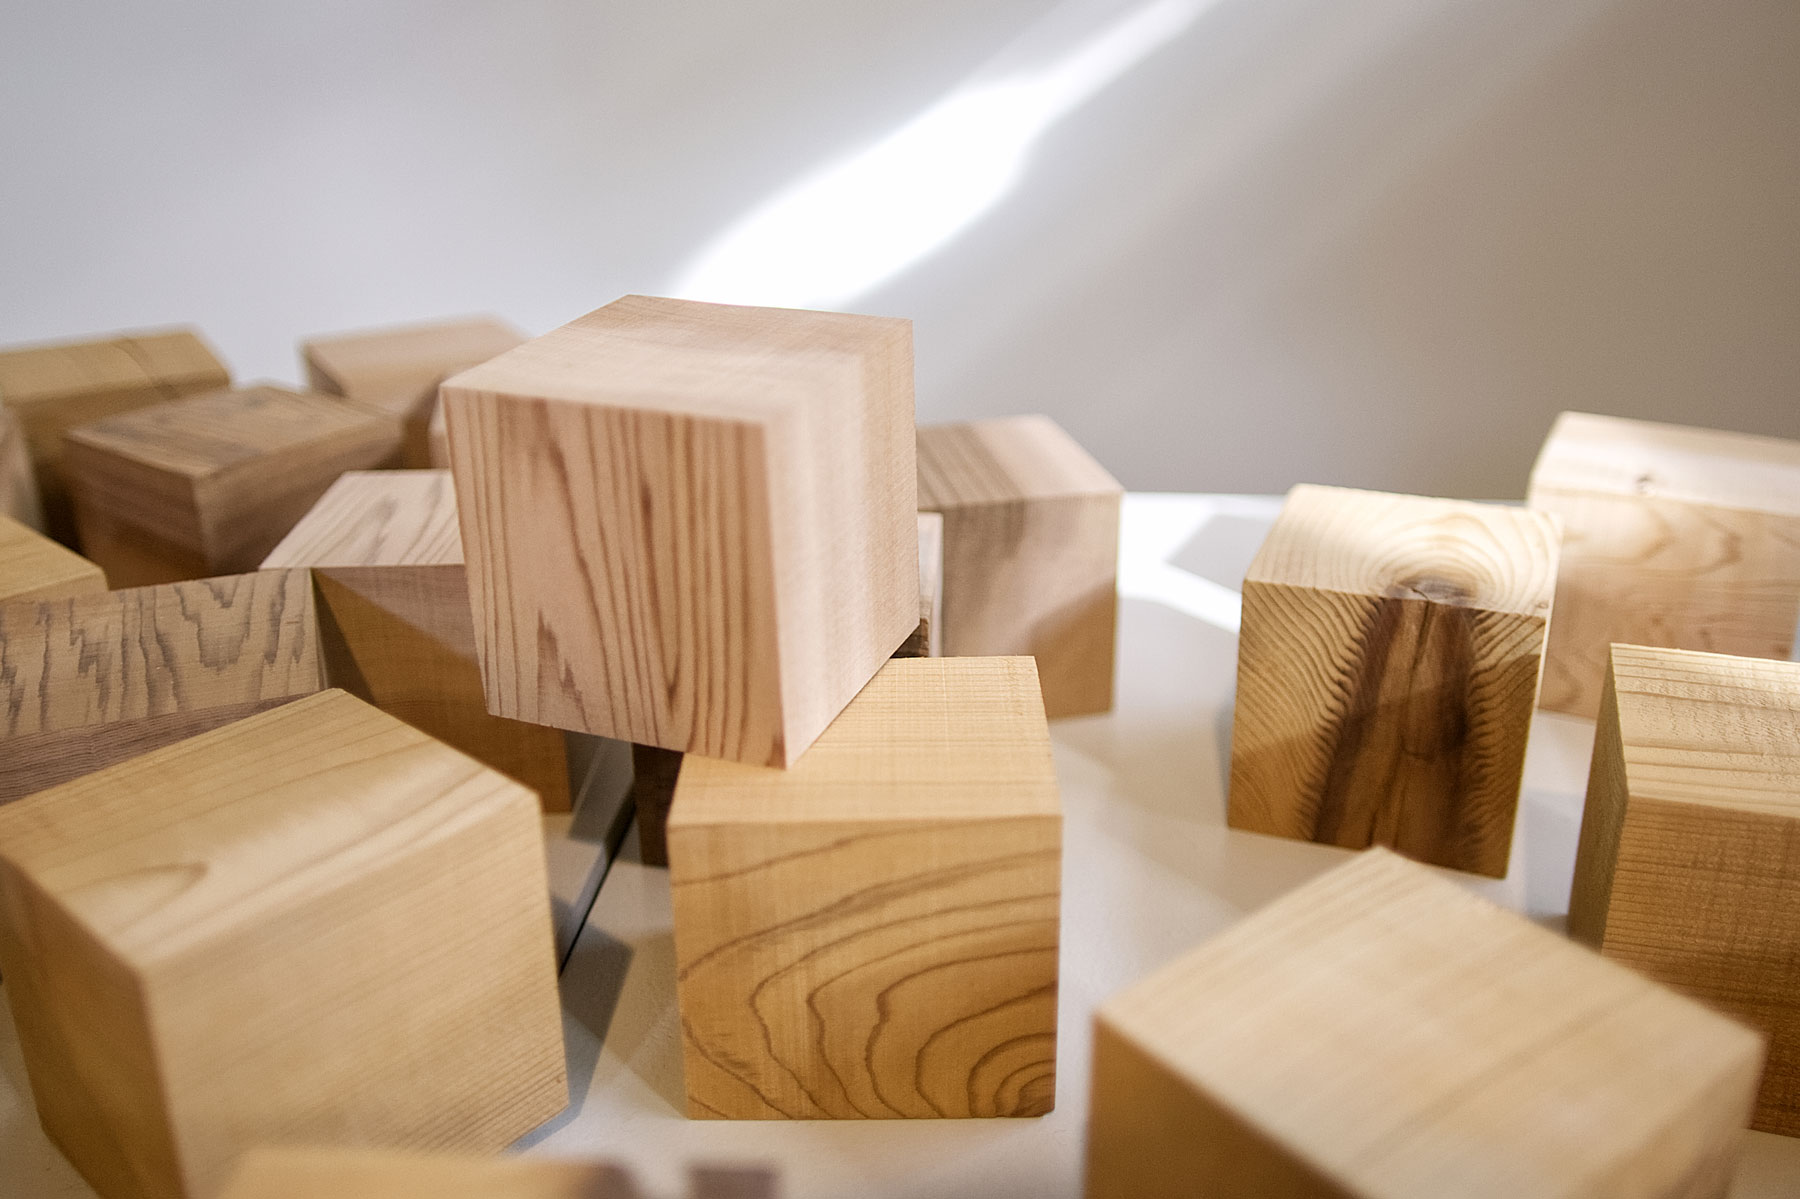 Little wooden blocks.